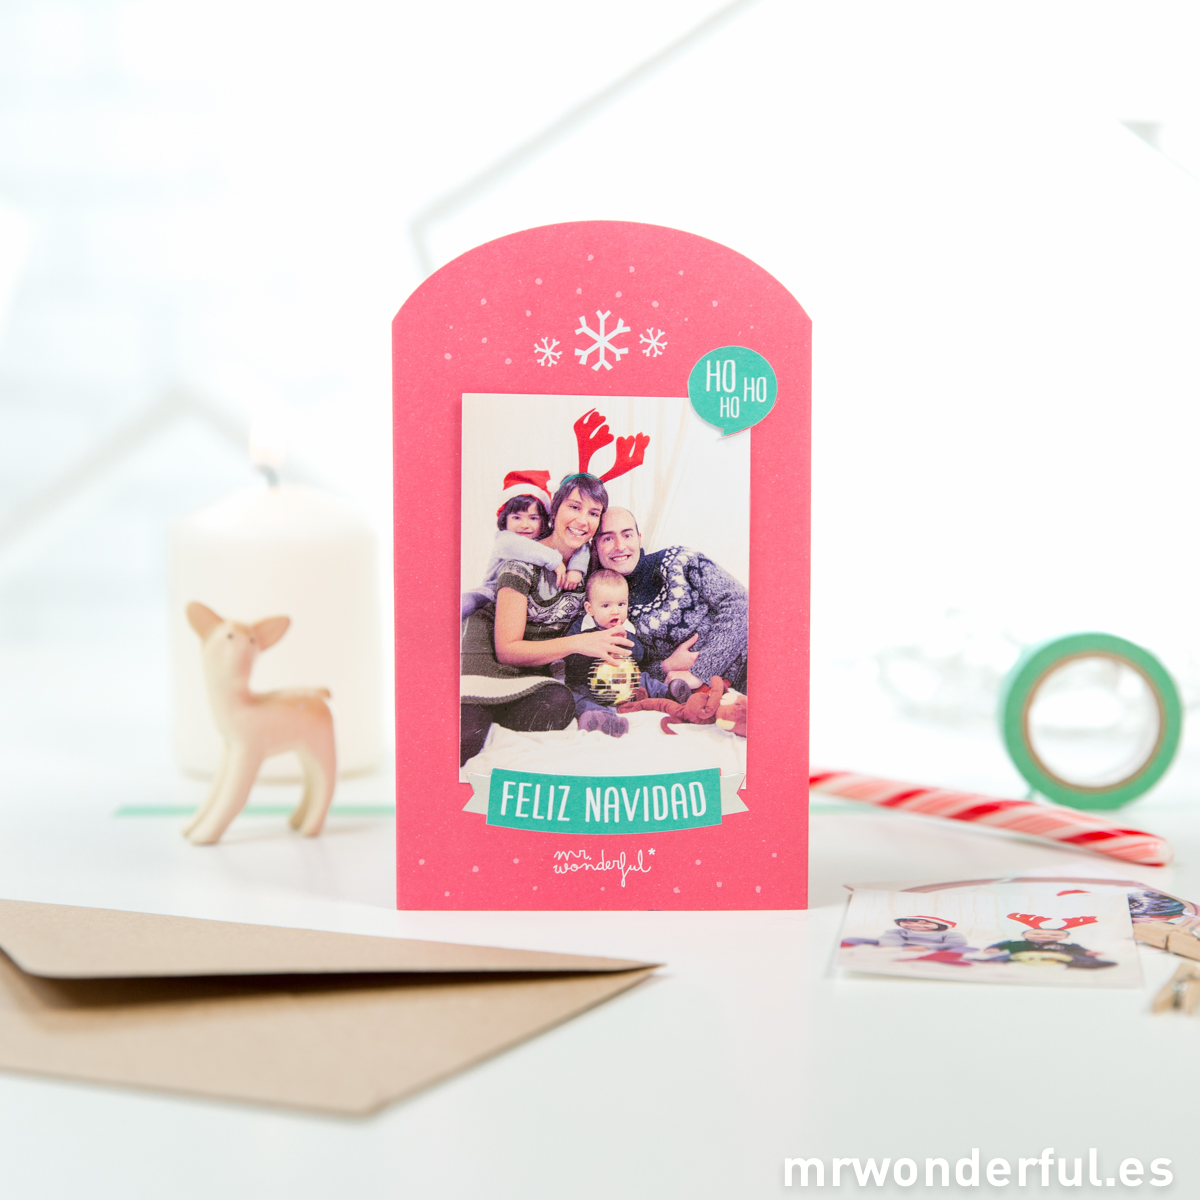 Mr.Wonderful tarjeta benéfica navidad 2015